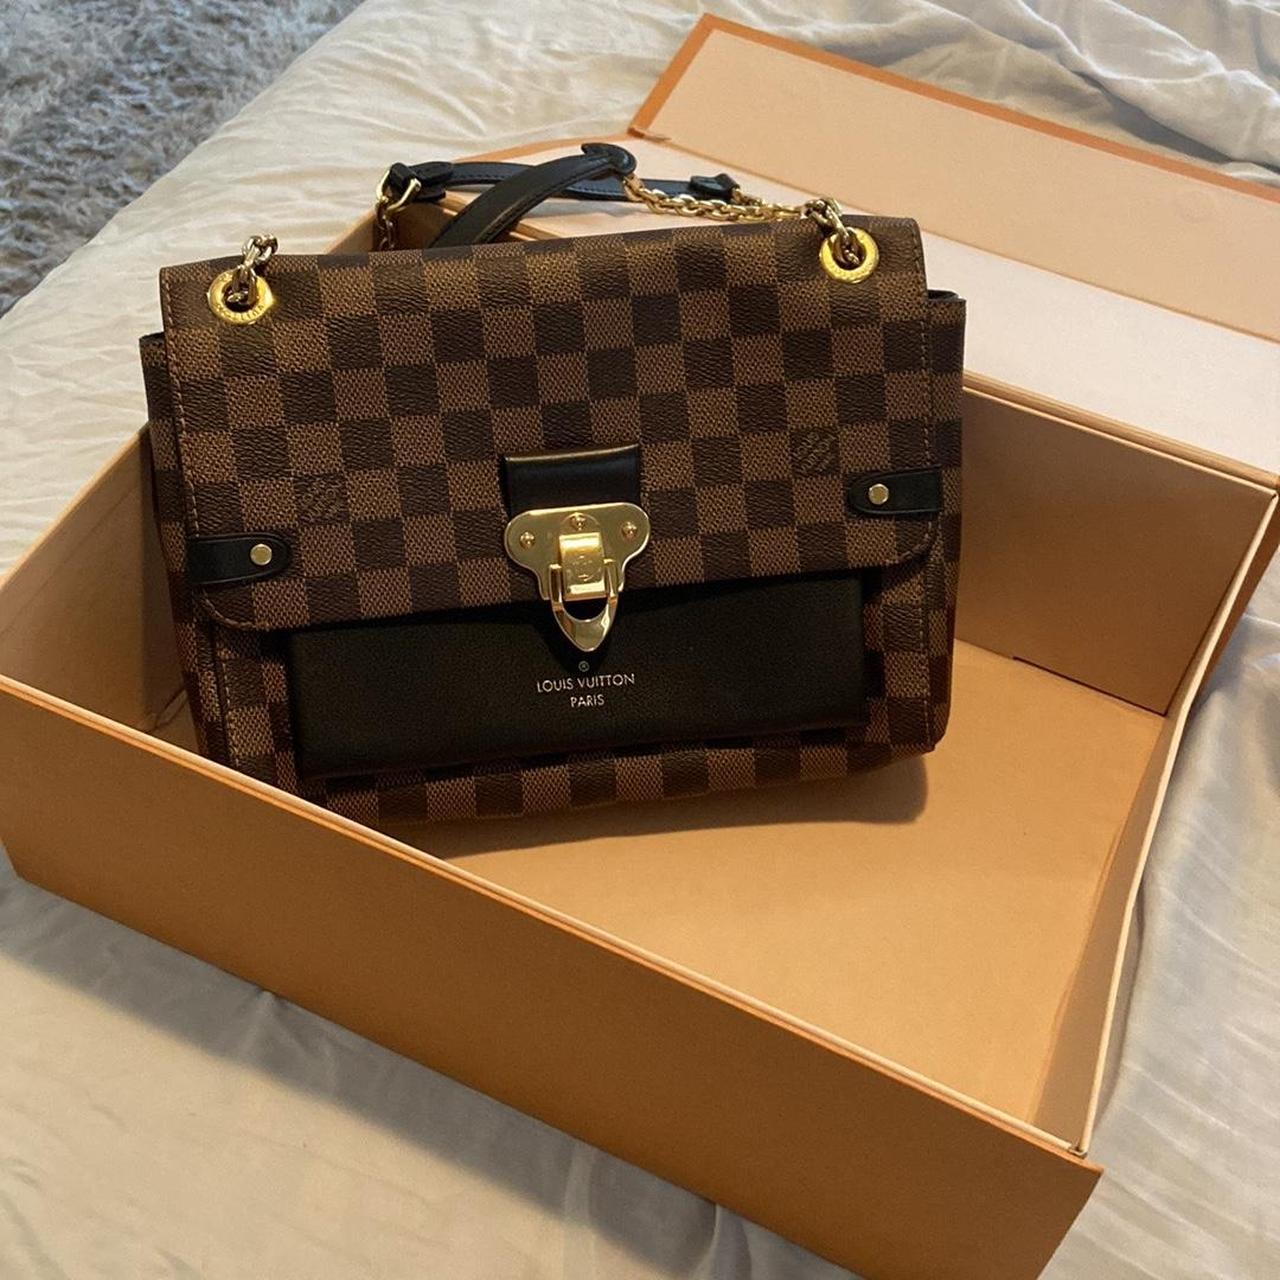 Louis Vuitton purse box - Depop